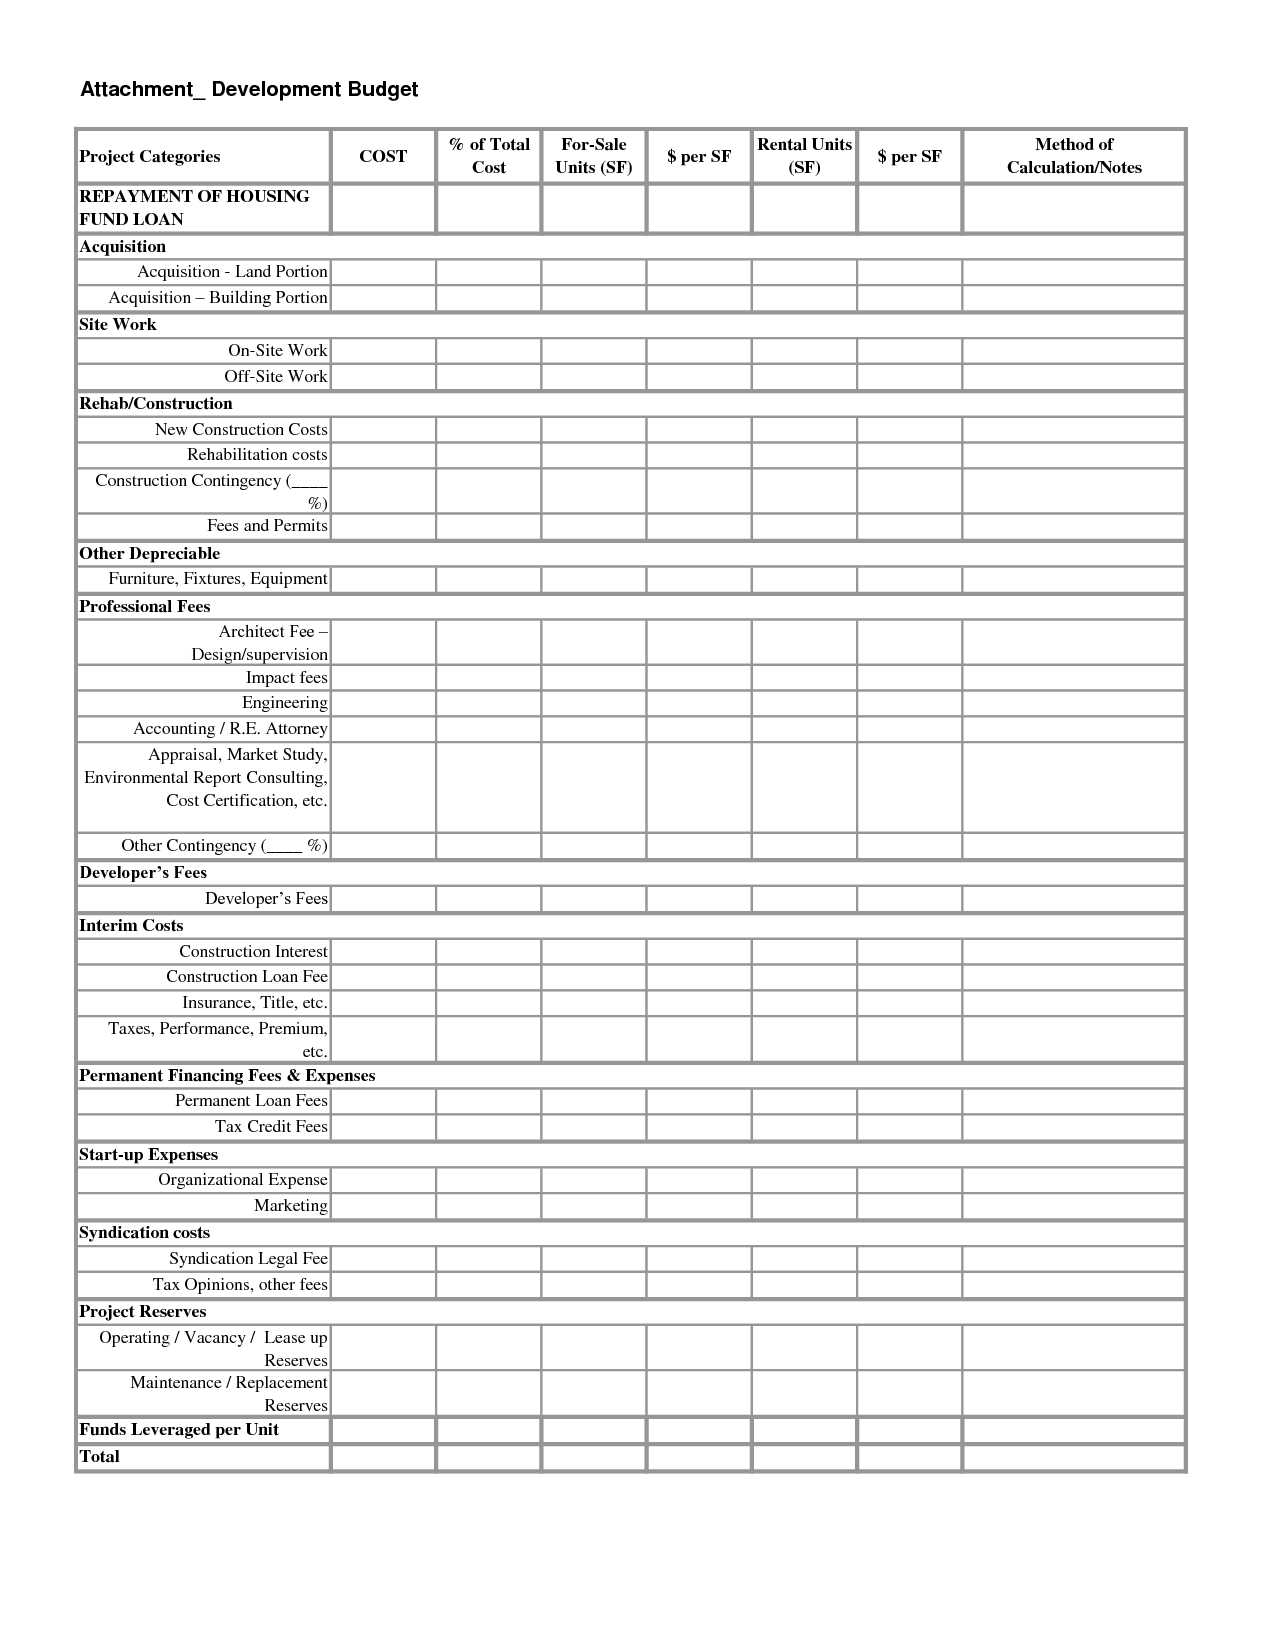 Financial Budget Worksheet together with Student Finance Bud Spreadsheet 2018 Sample Expense Report Etame